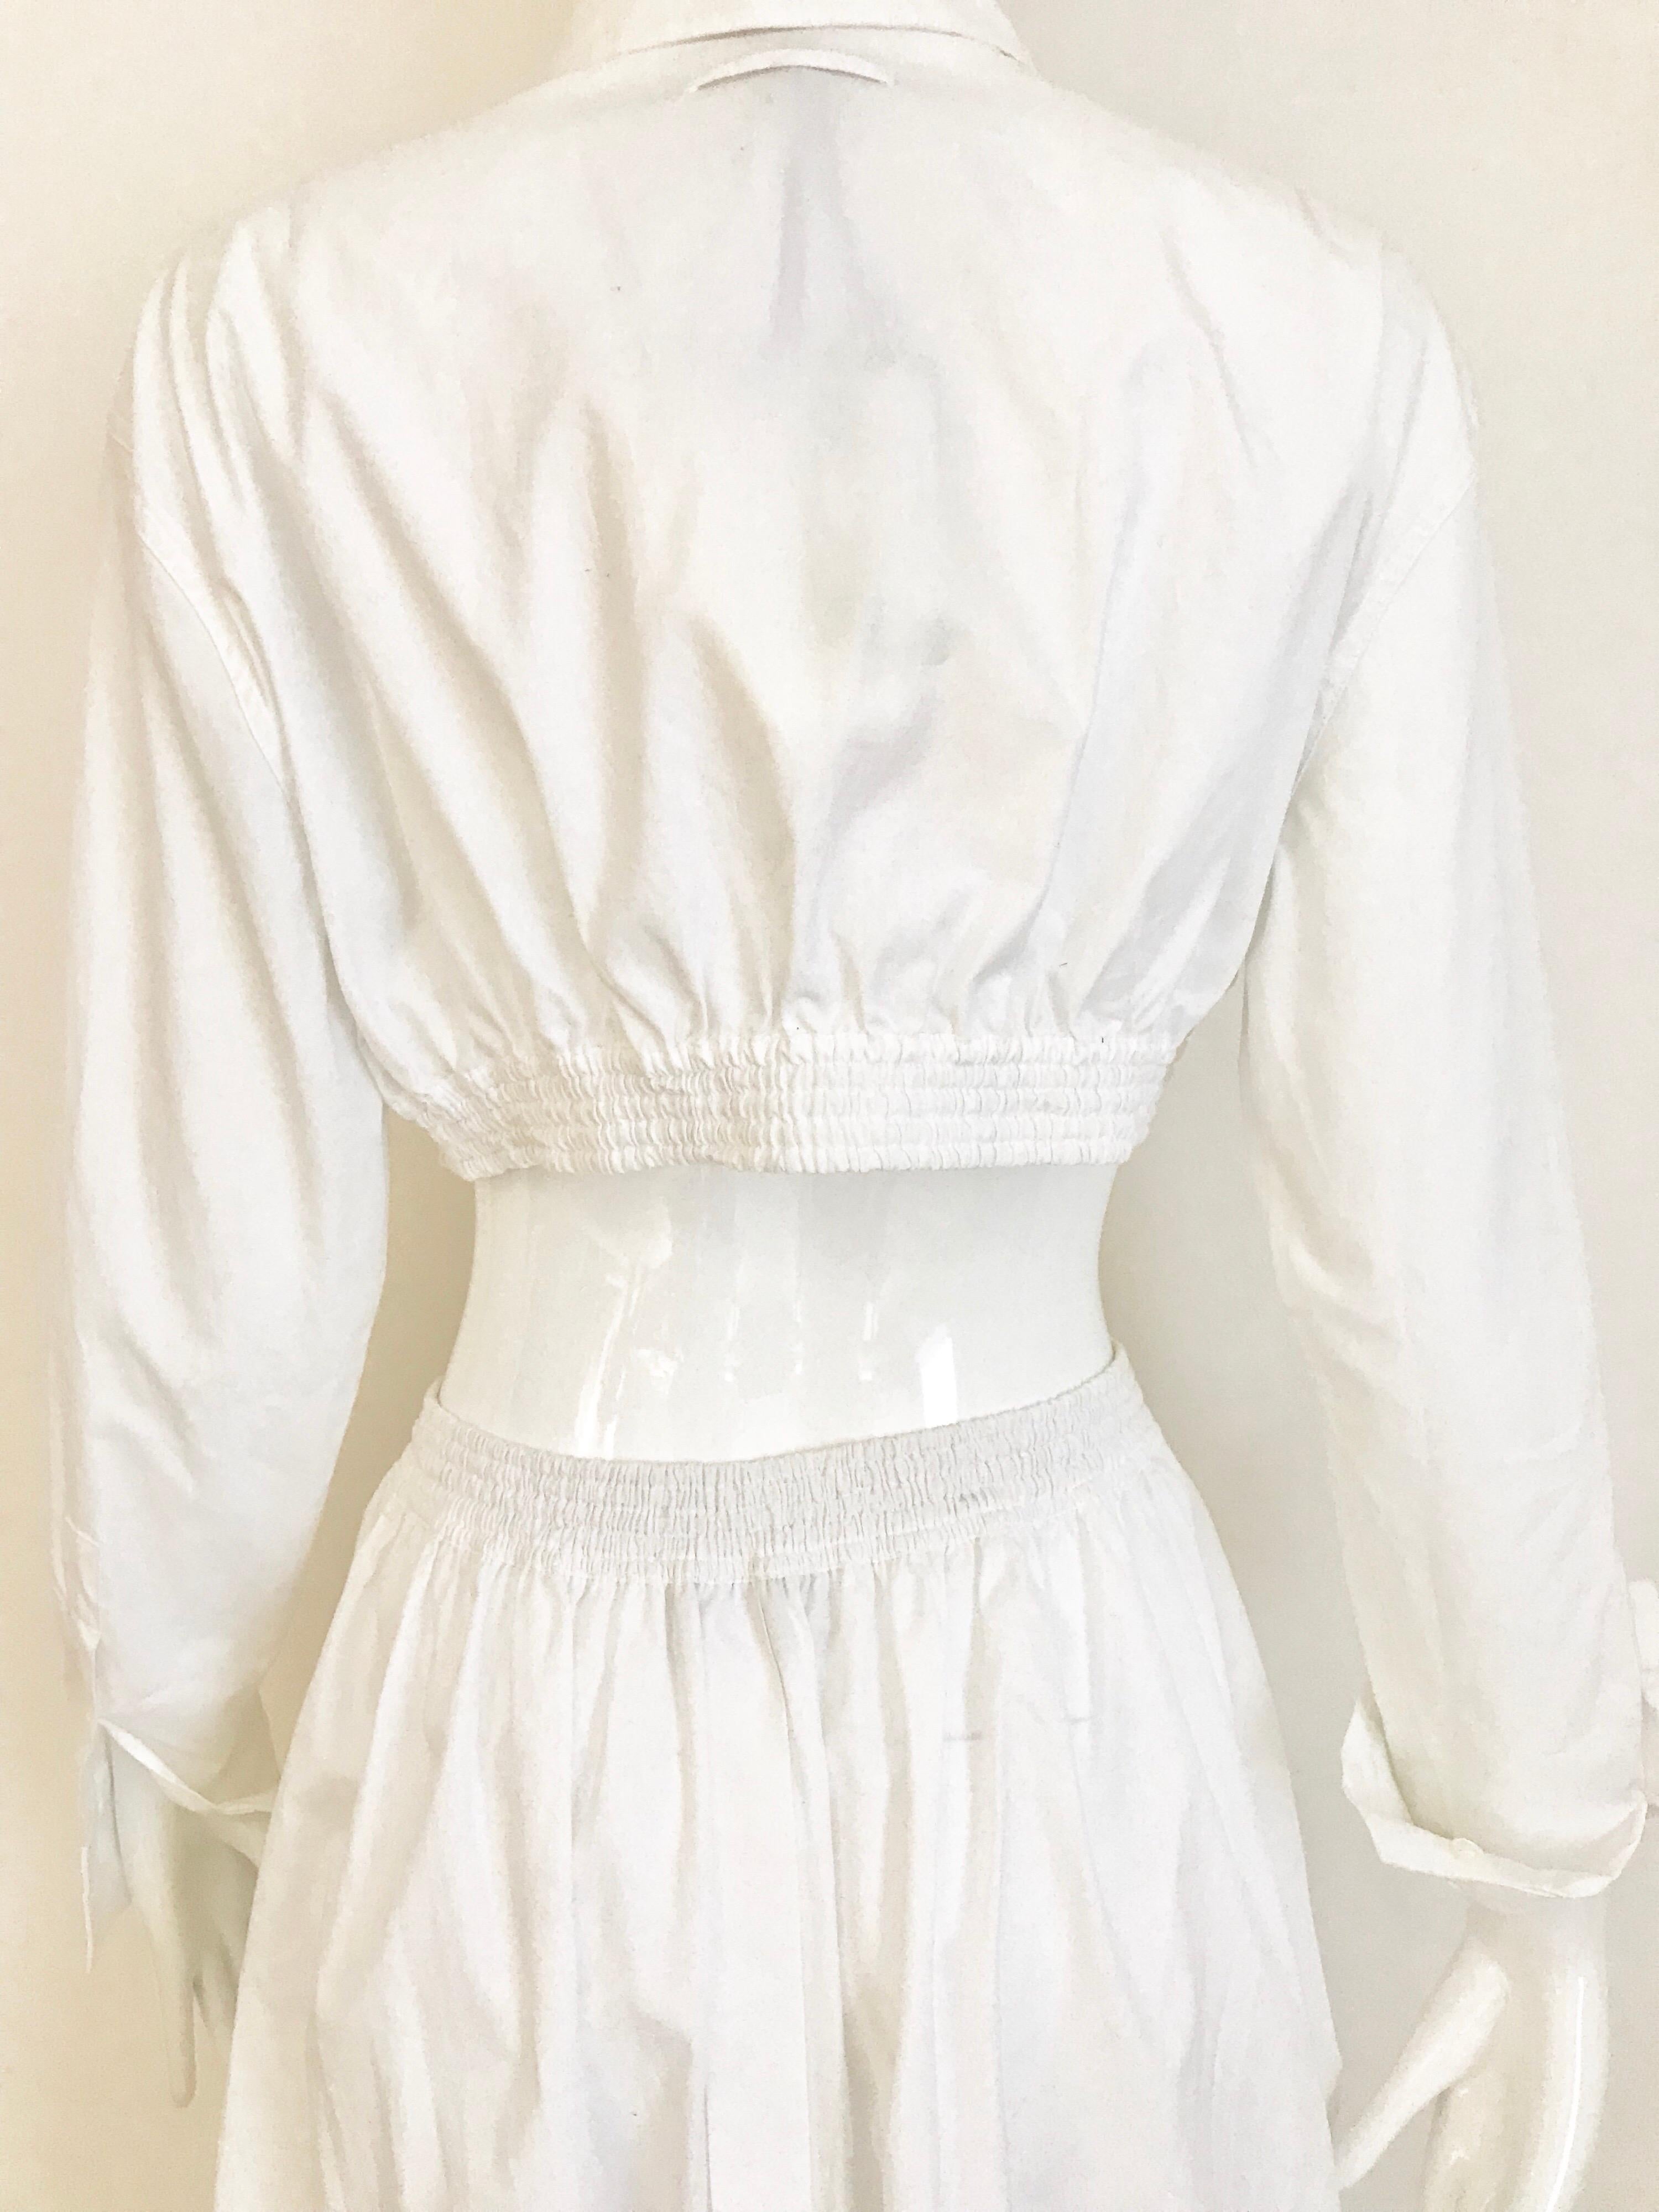 Jean Paul Gaultier White Cotton Crop Top and Skirt im Zustand „Neu“ in Beverly Hills, CA